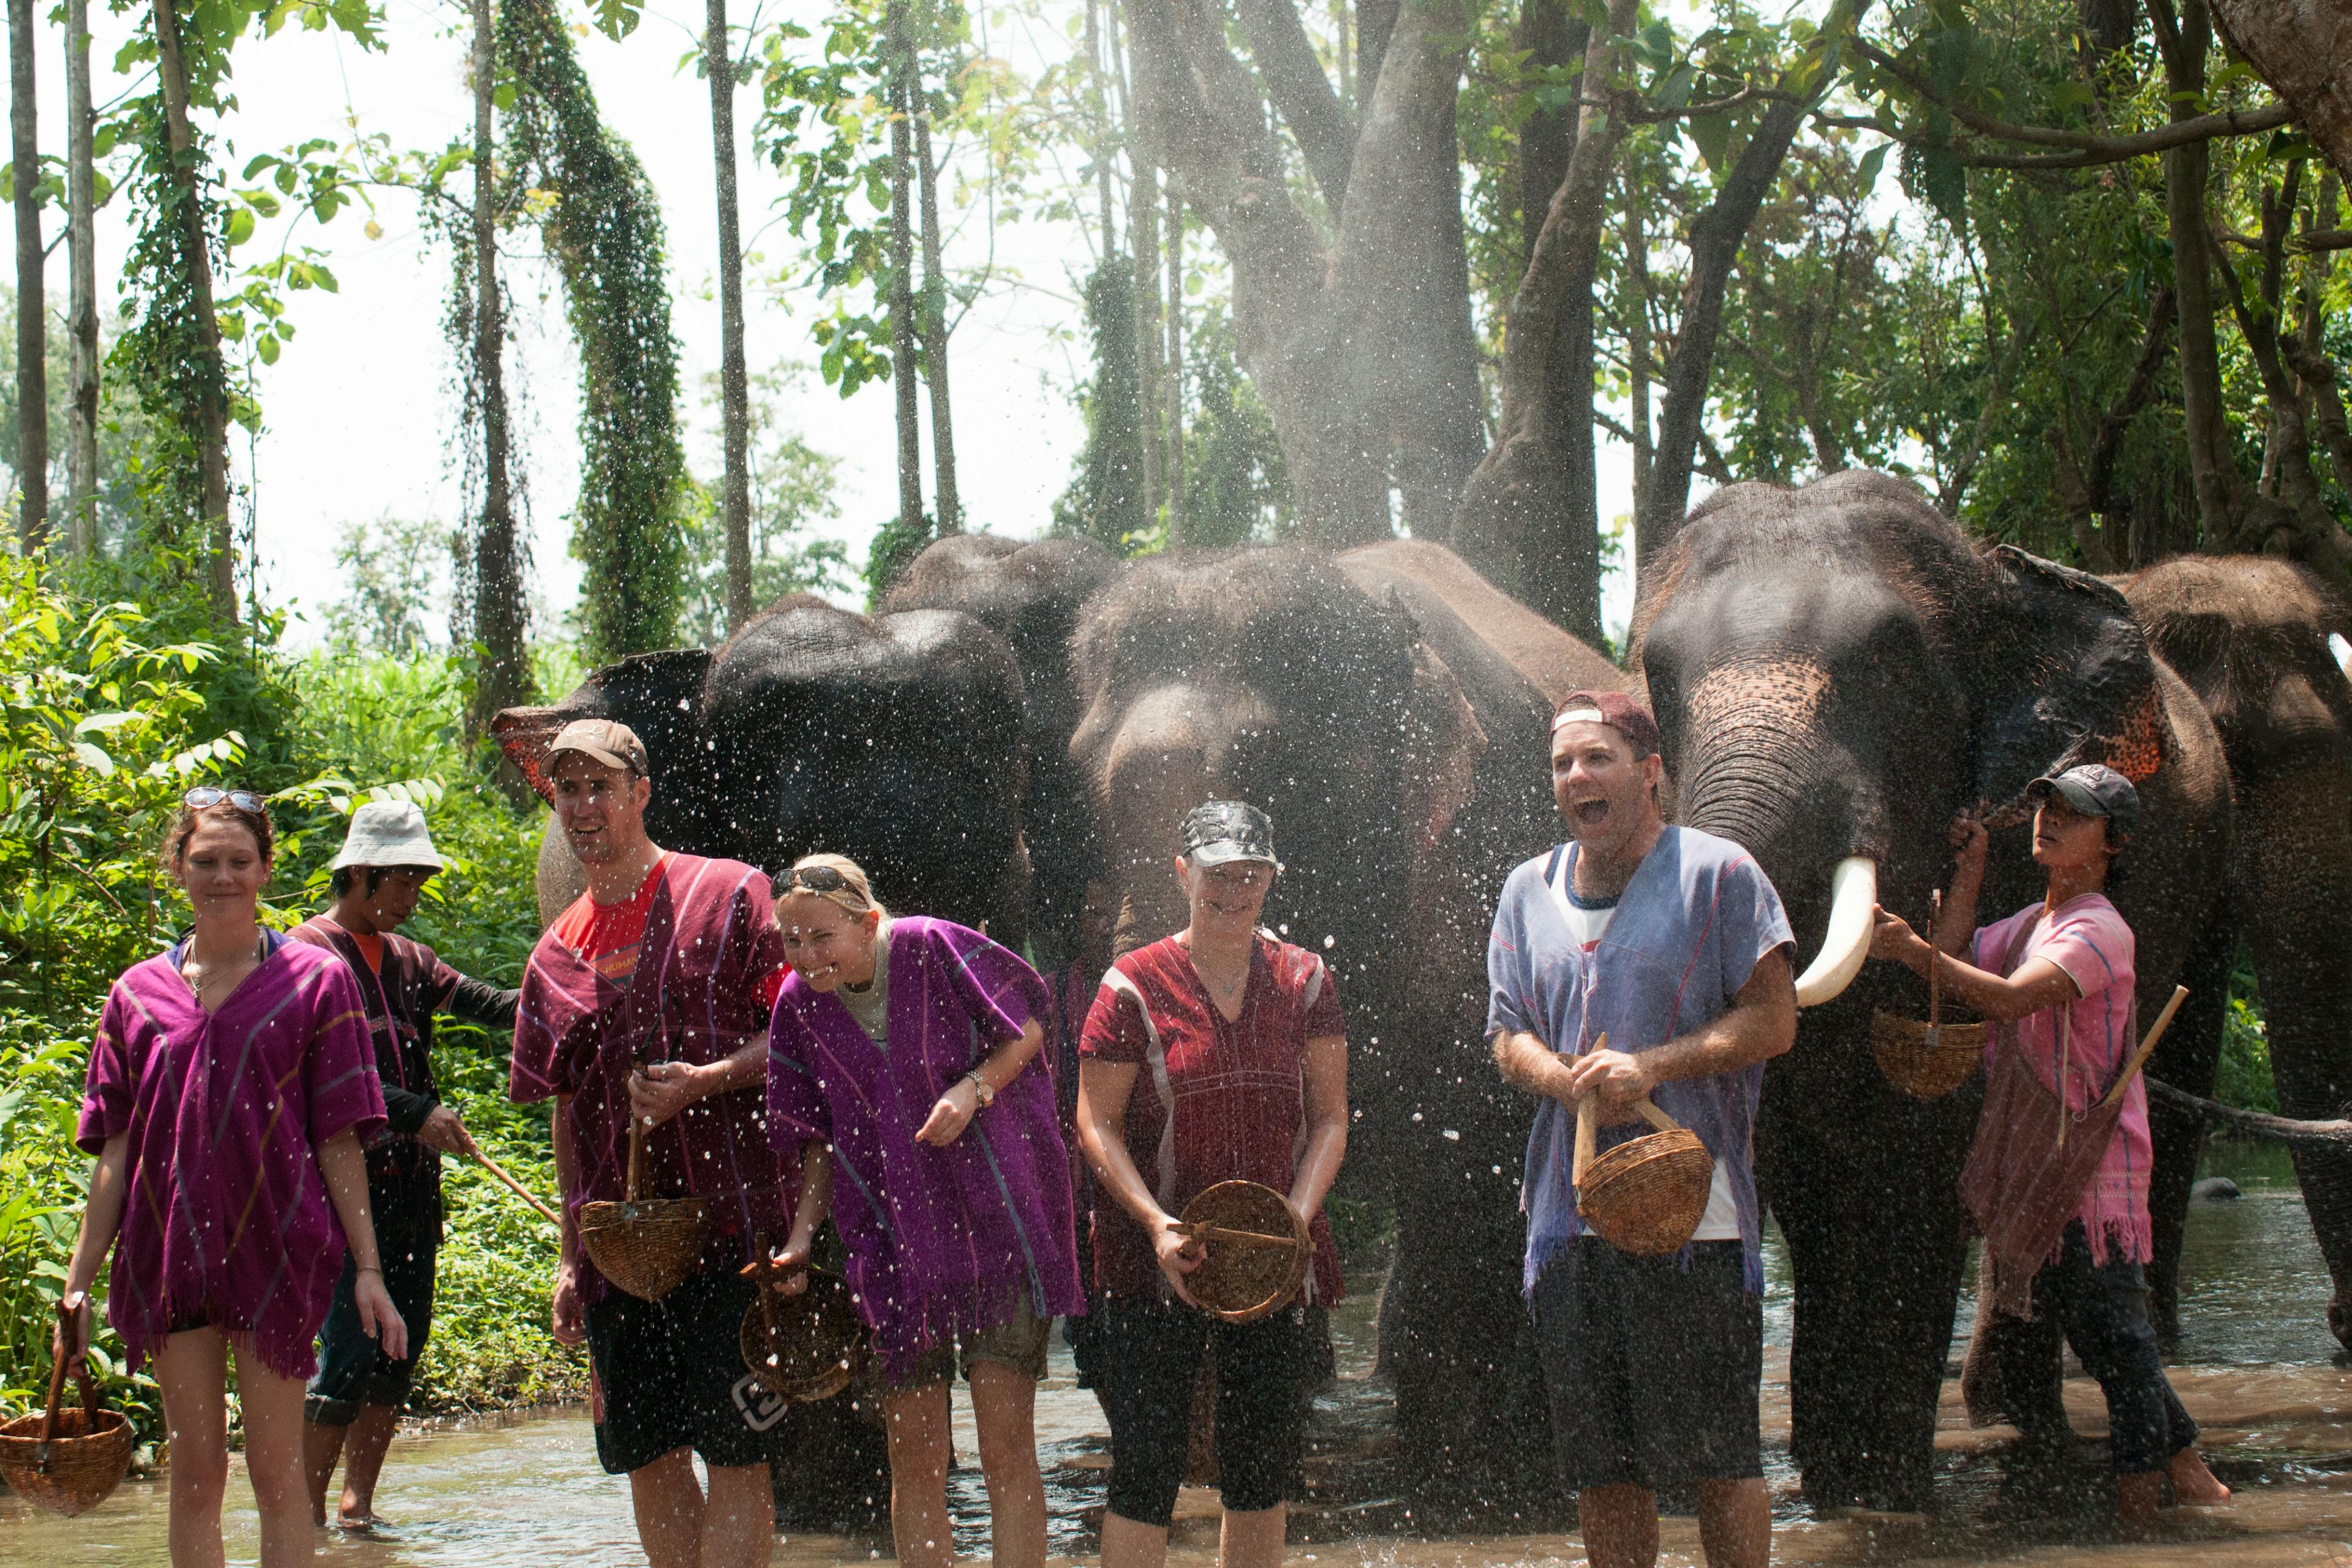 Program A Play with elephants